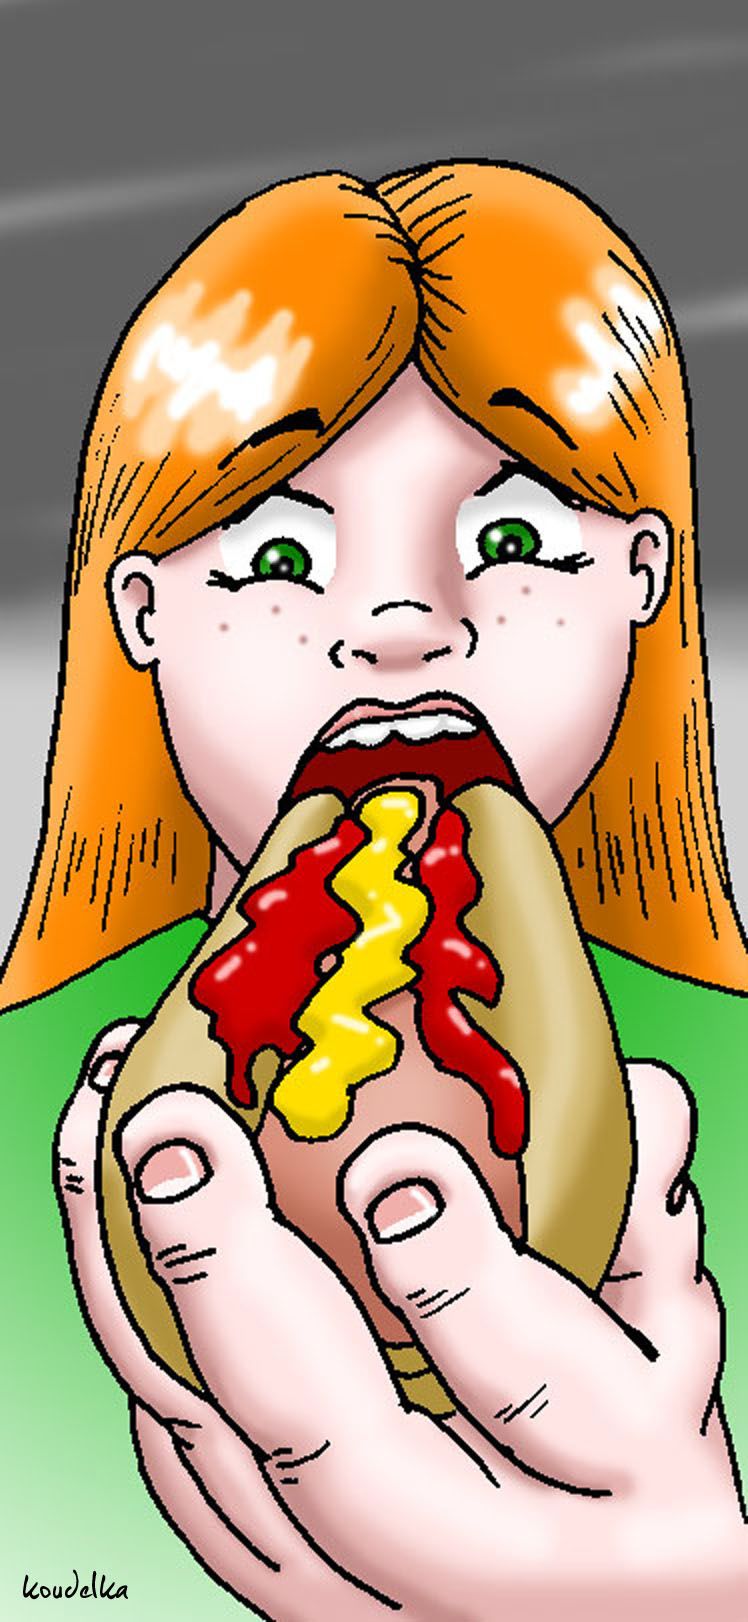 [TheKouldelka] Gluttony Girl 2